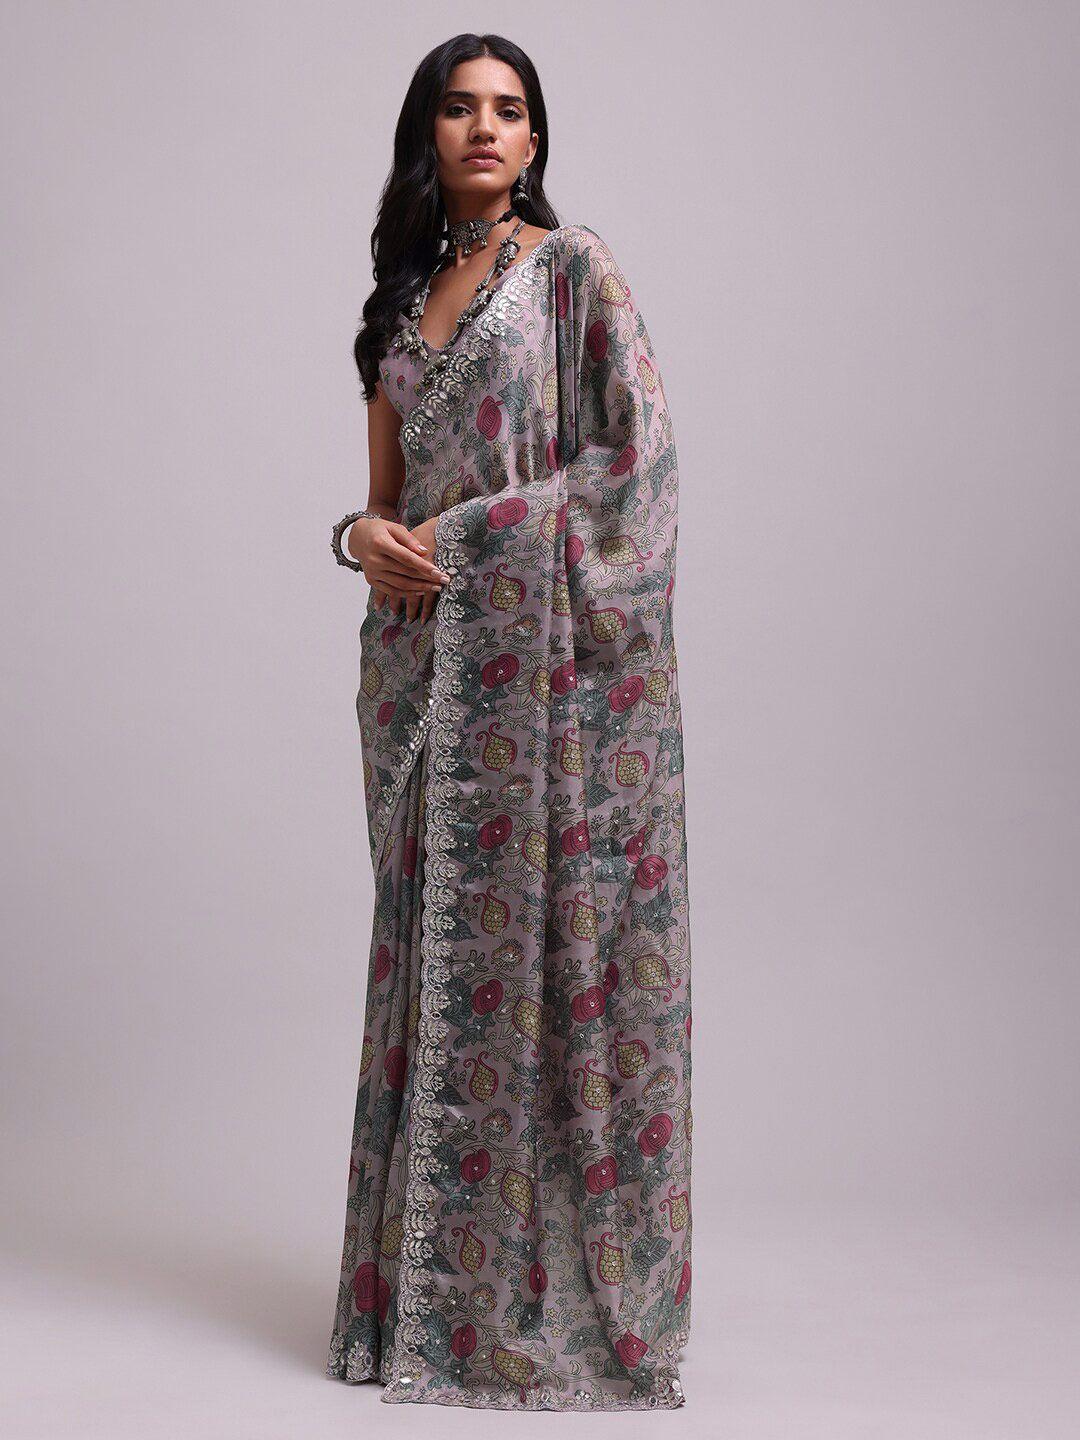 kalki fashion floral printed embroidered detailed saree